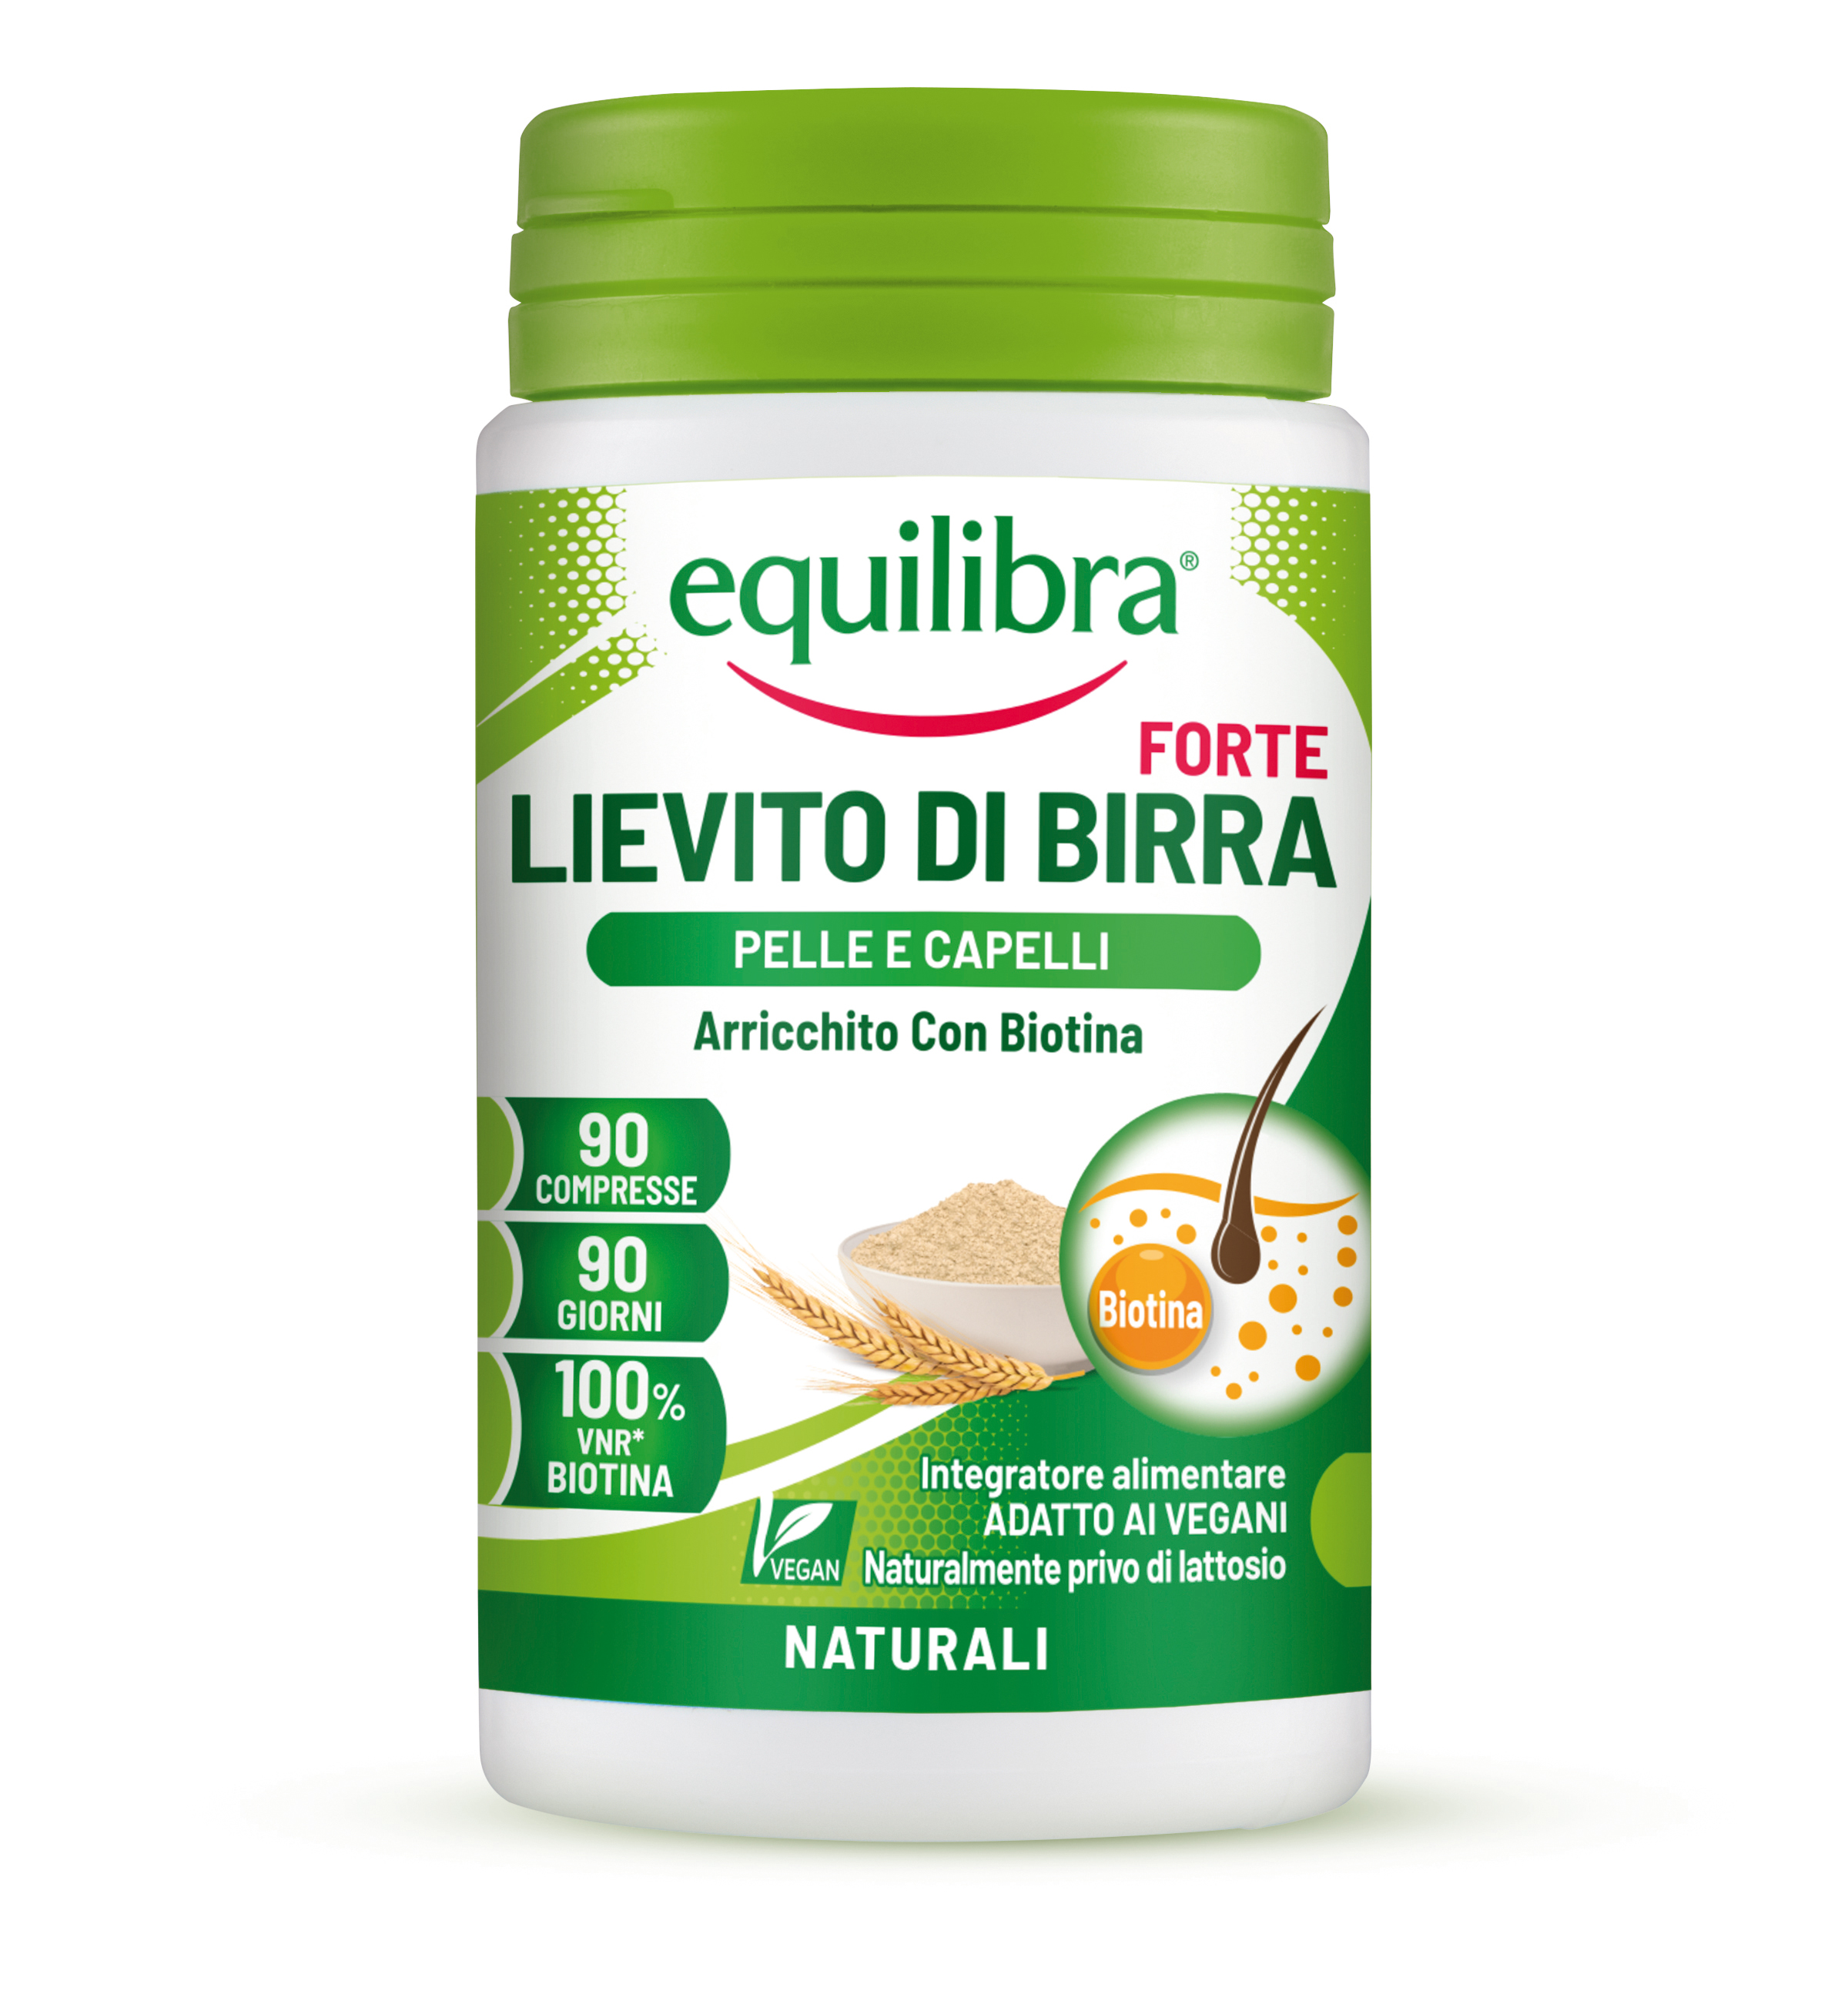 Image of Lievito di Birra Forte Equilibra 90 Compresse